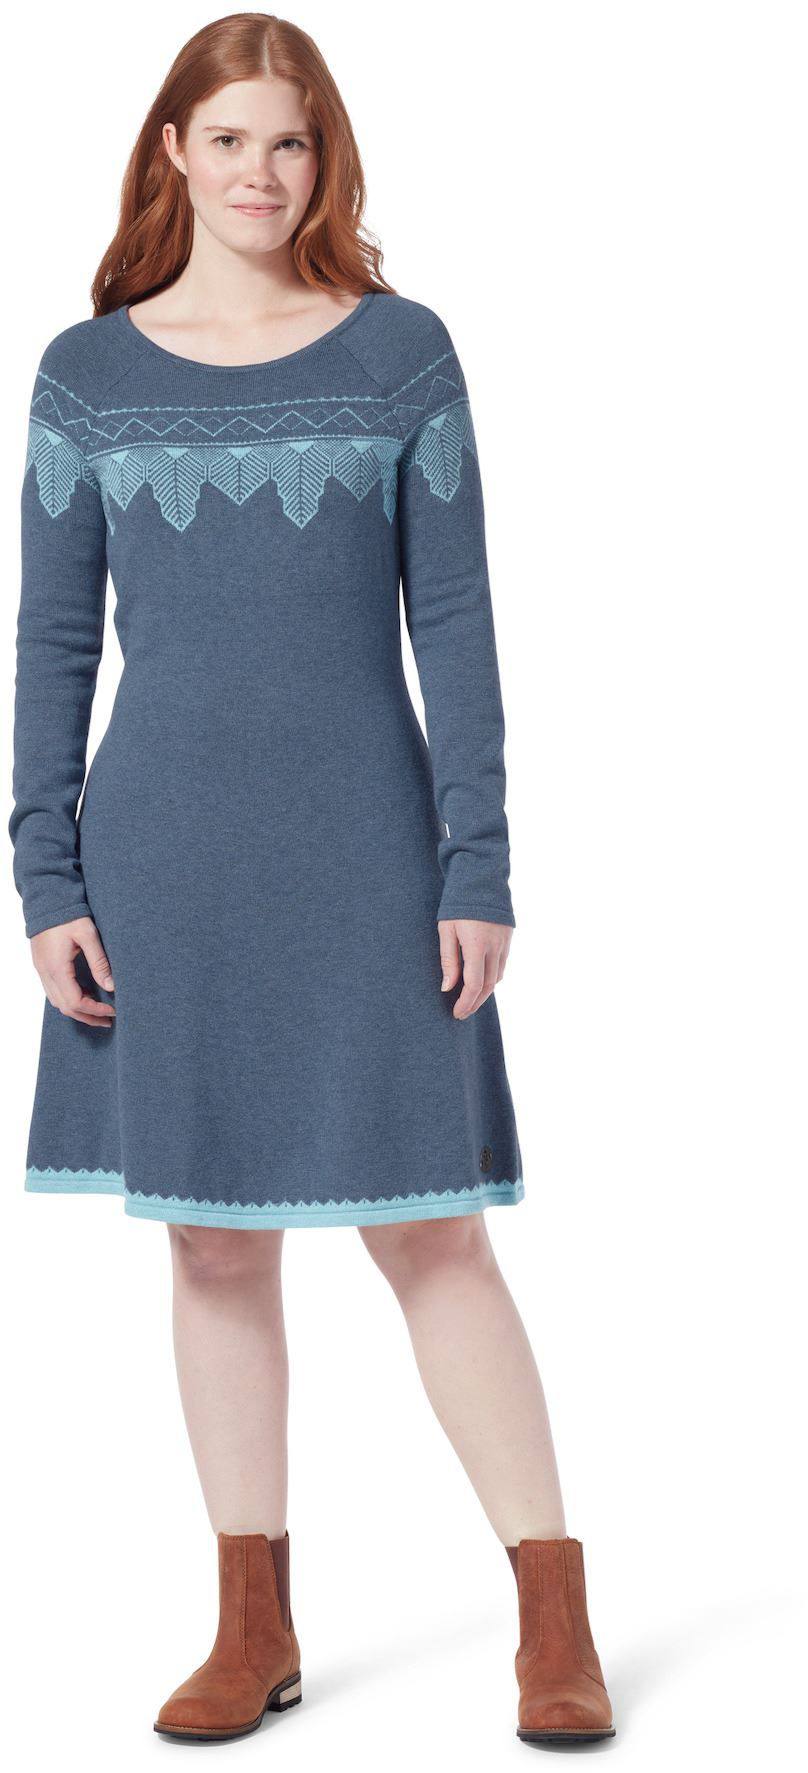 All Season Sweater Dress Light blue XS